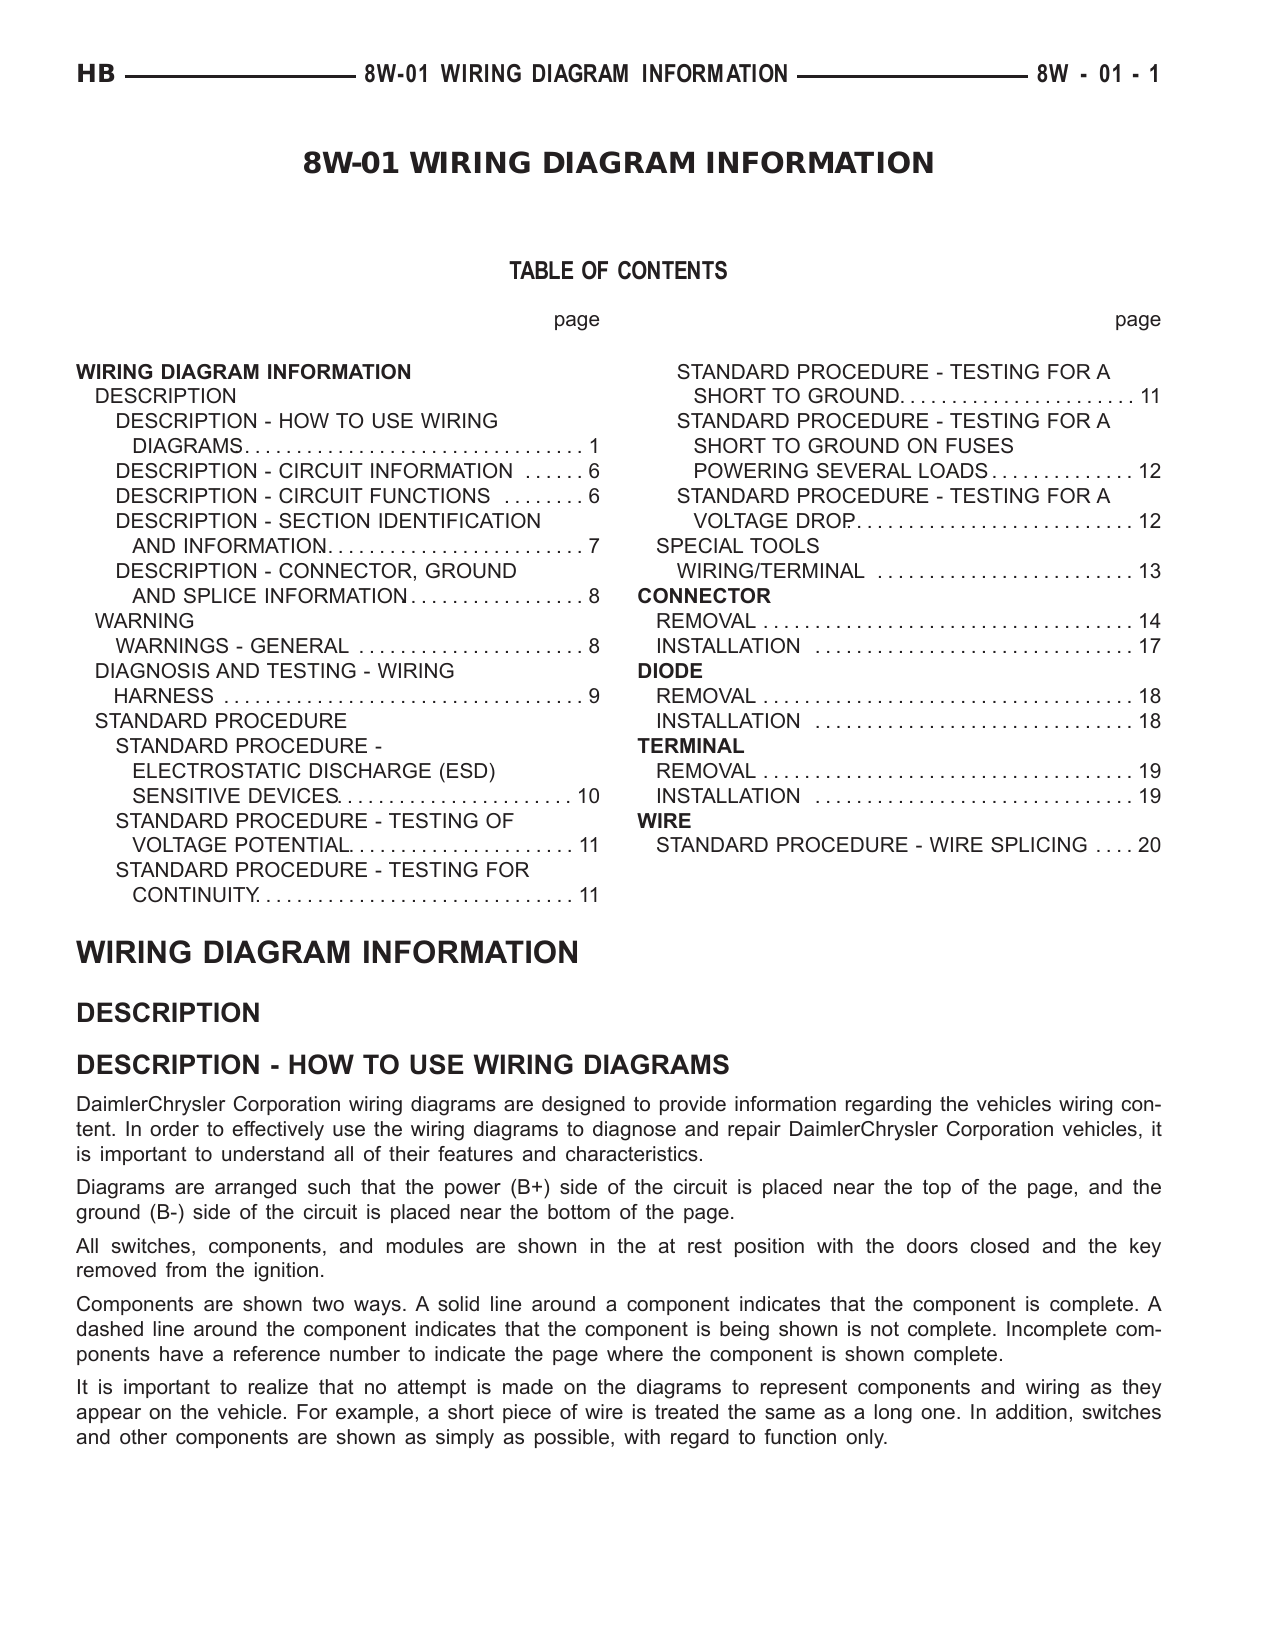 Wiring Diagram Information Manualzz